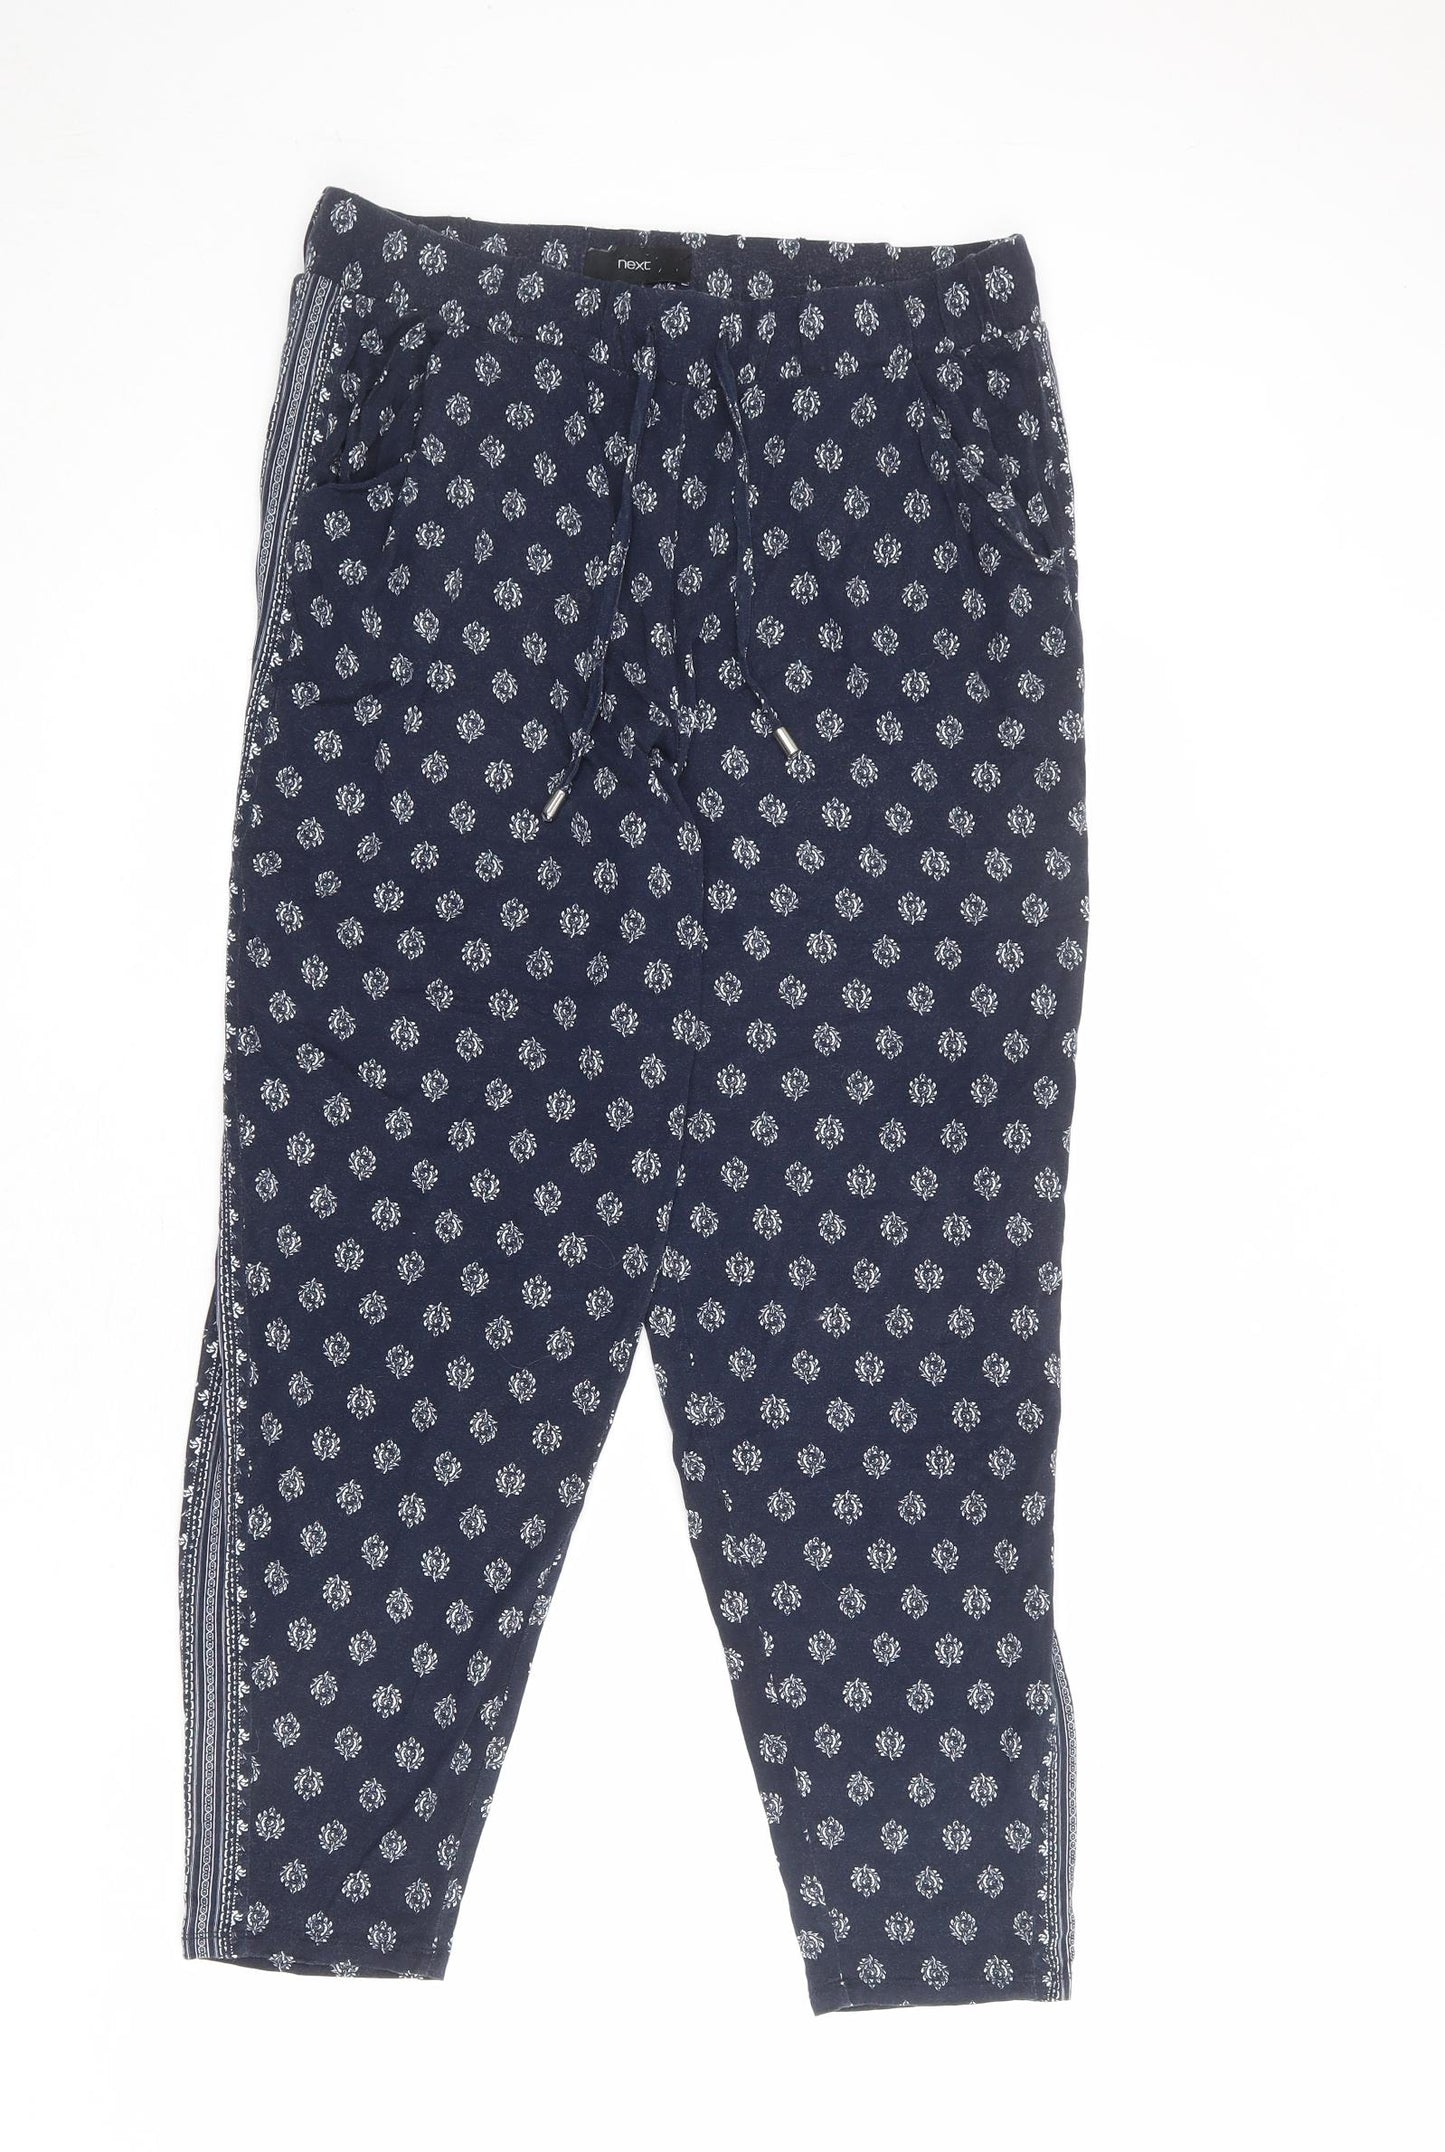 NEXT Womens Blue Geometric Viscose Trousers Size 14 L28 in Regular